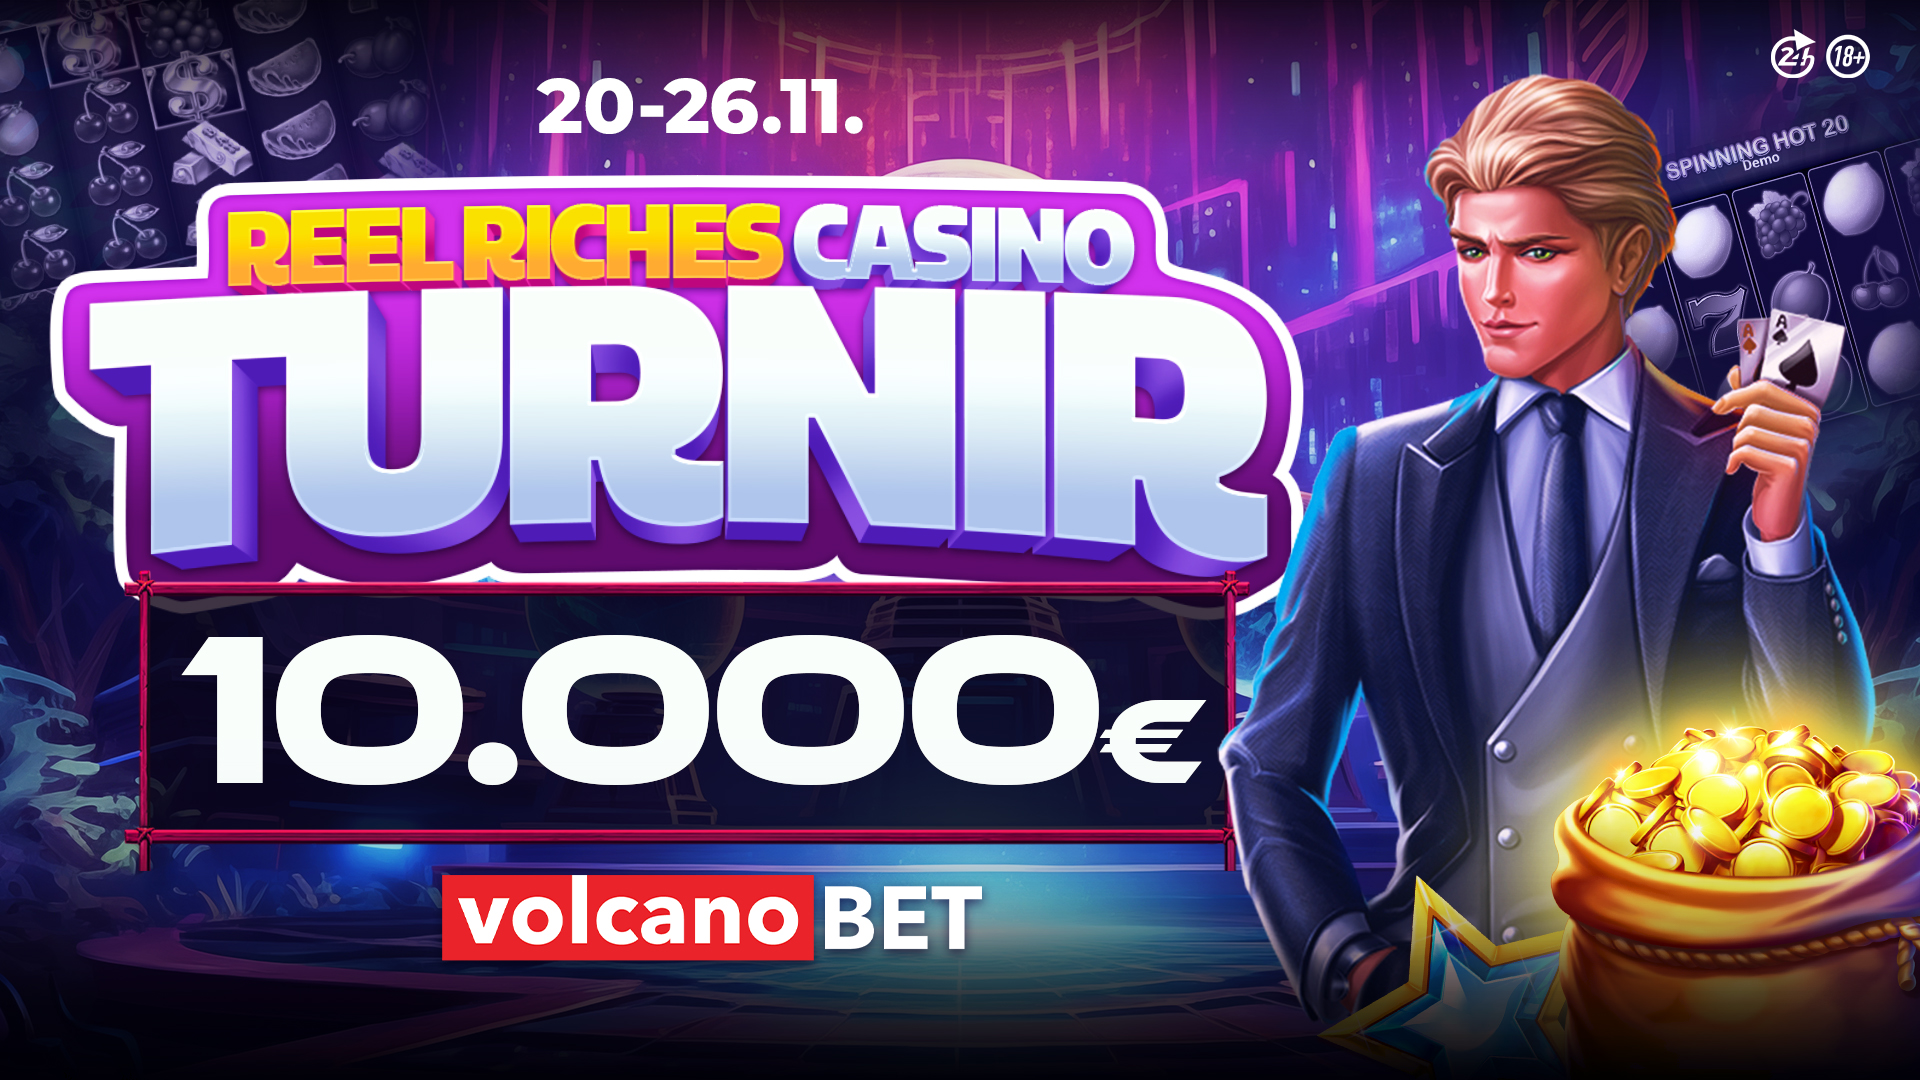 Reel Riches Casino Turnir